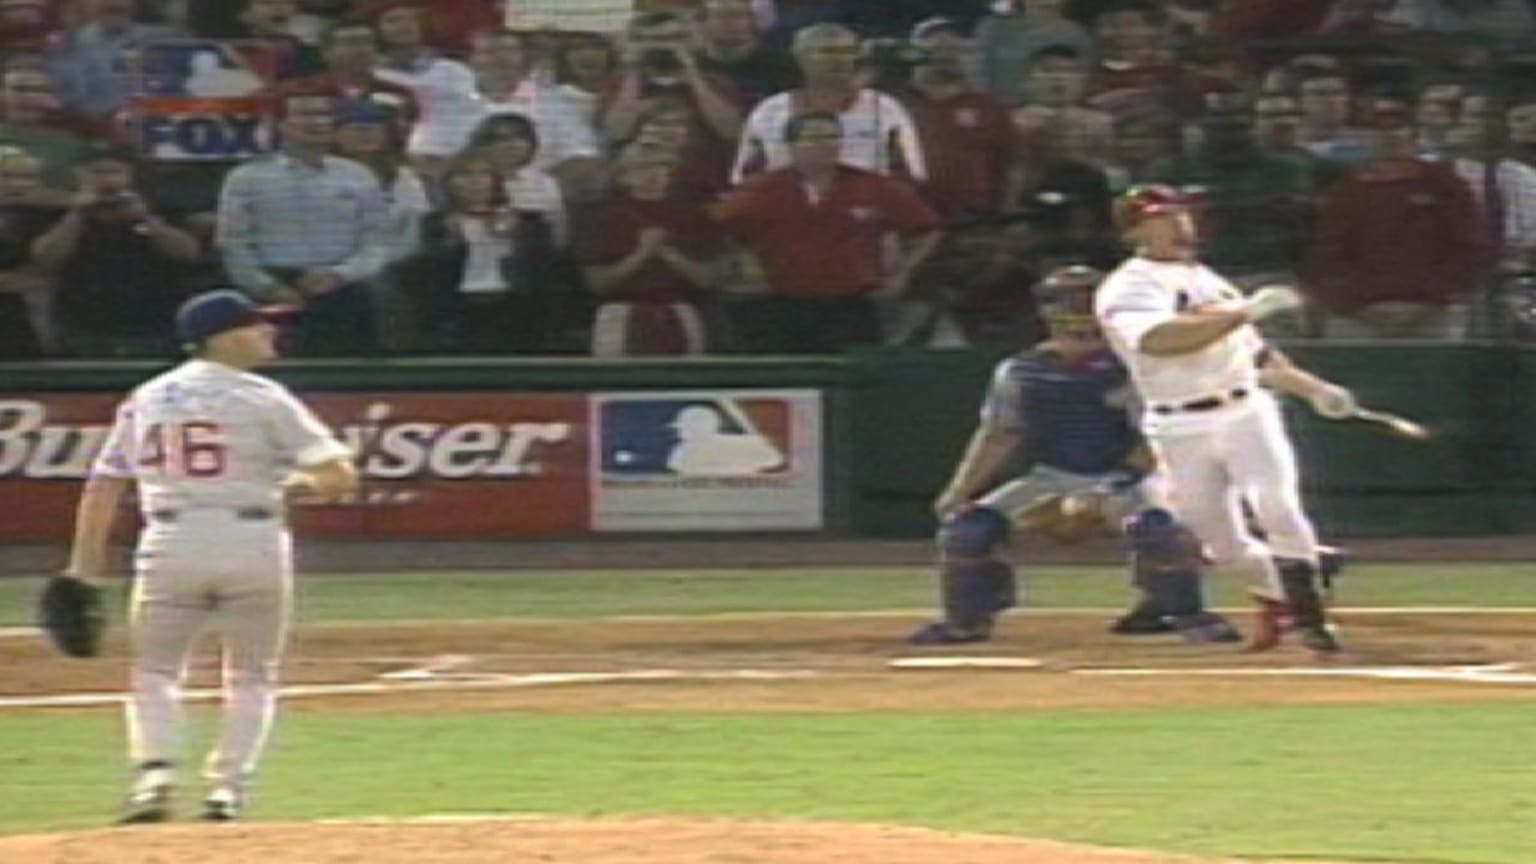 McGwire hits home run No. 62, 09/08/1998